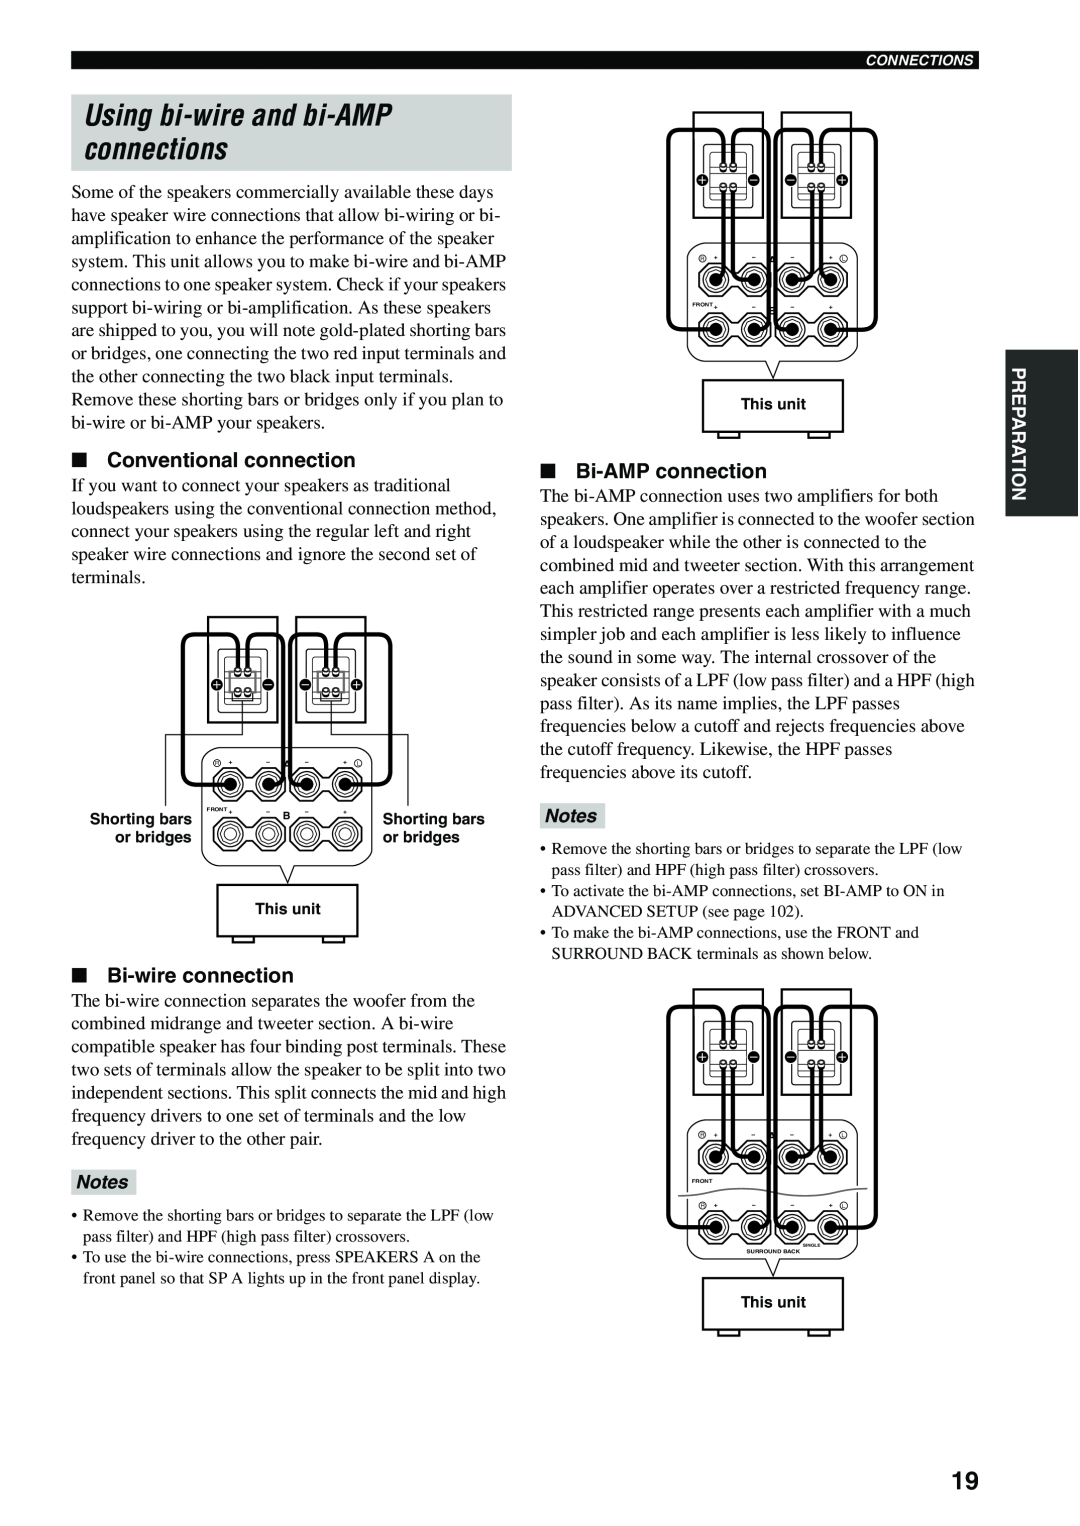 Yamaha X-V2600 Using bi-wireand bi-AMPconnections, Conventional connection, Bi-wireconnection, Bi-AMPconnection, Notes 